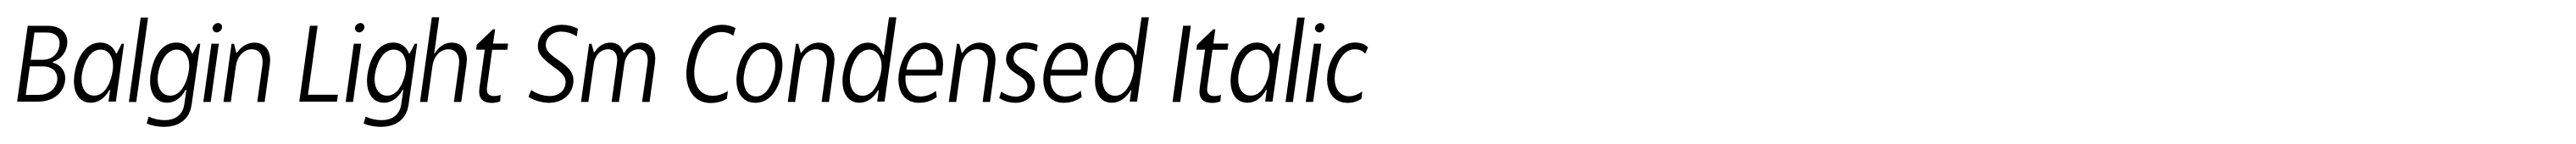 Balgin Light Sm Condensed Italic